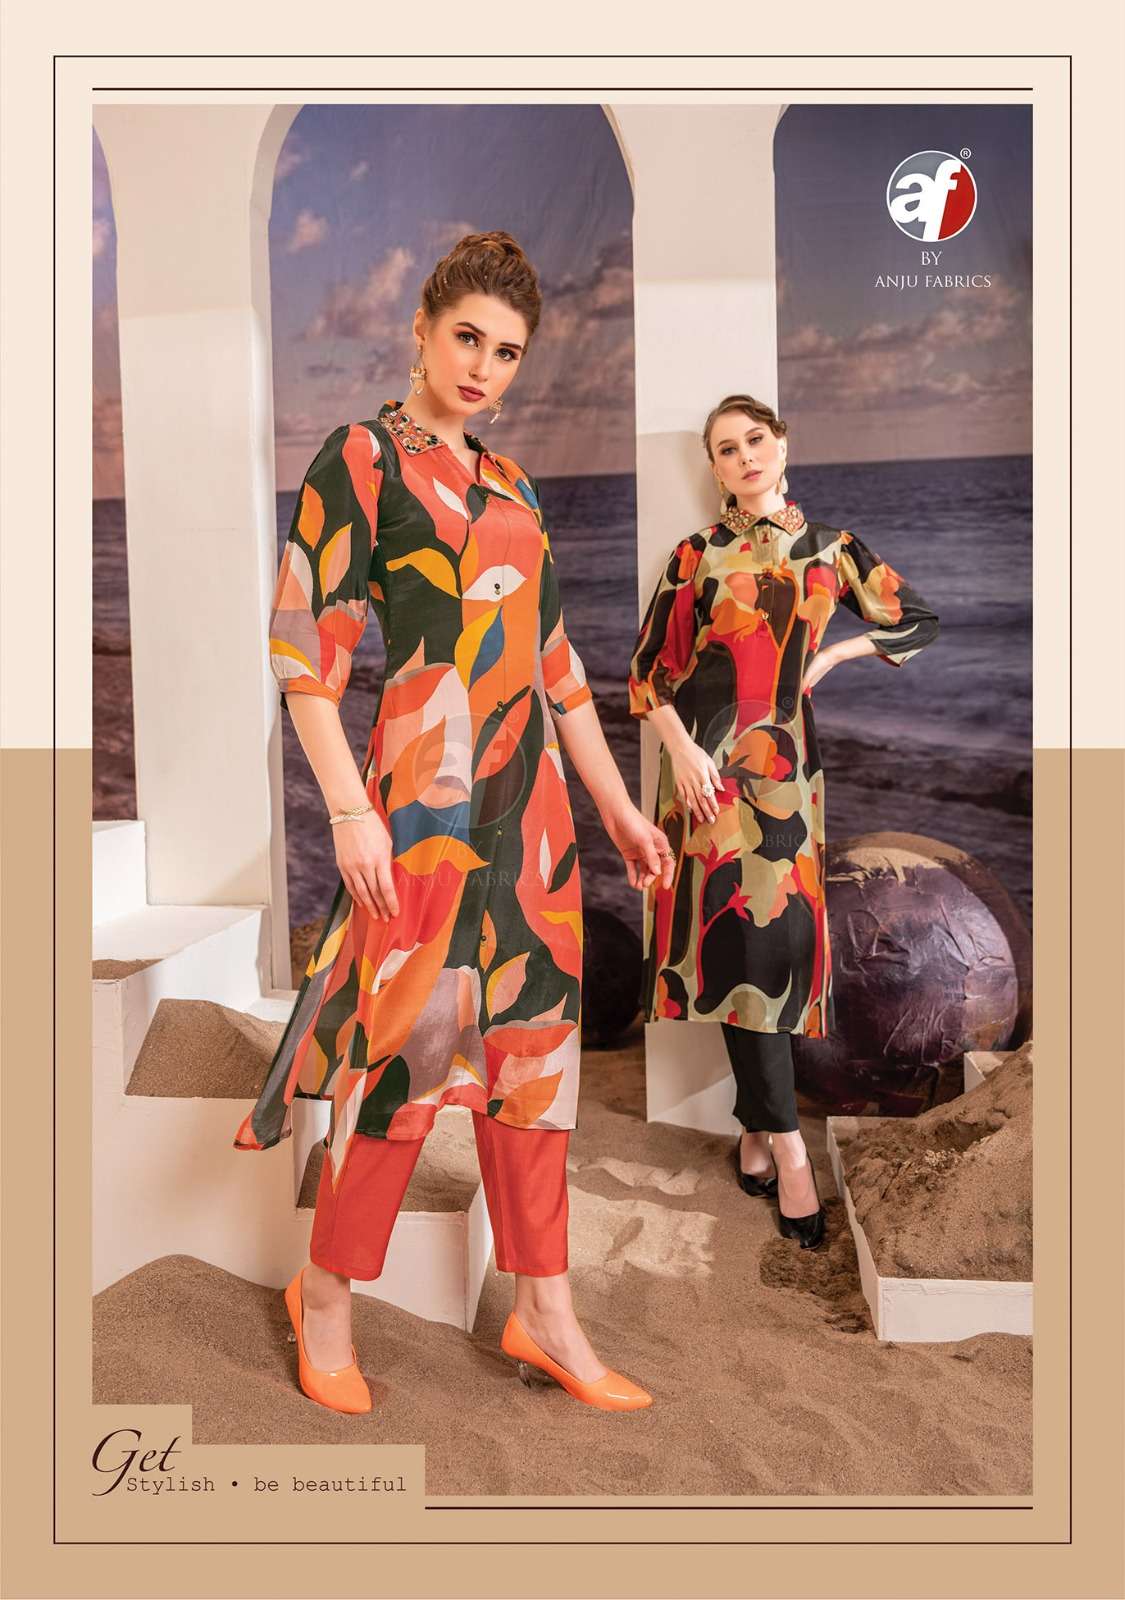 Anju Fabrics Natural vol -2 Kurti Wholesale catalog